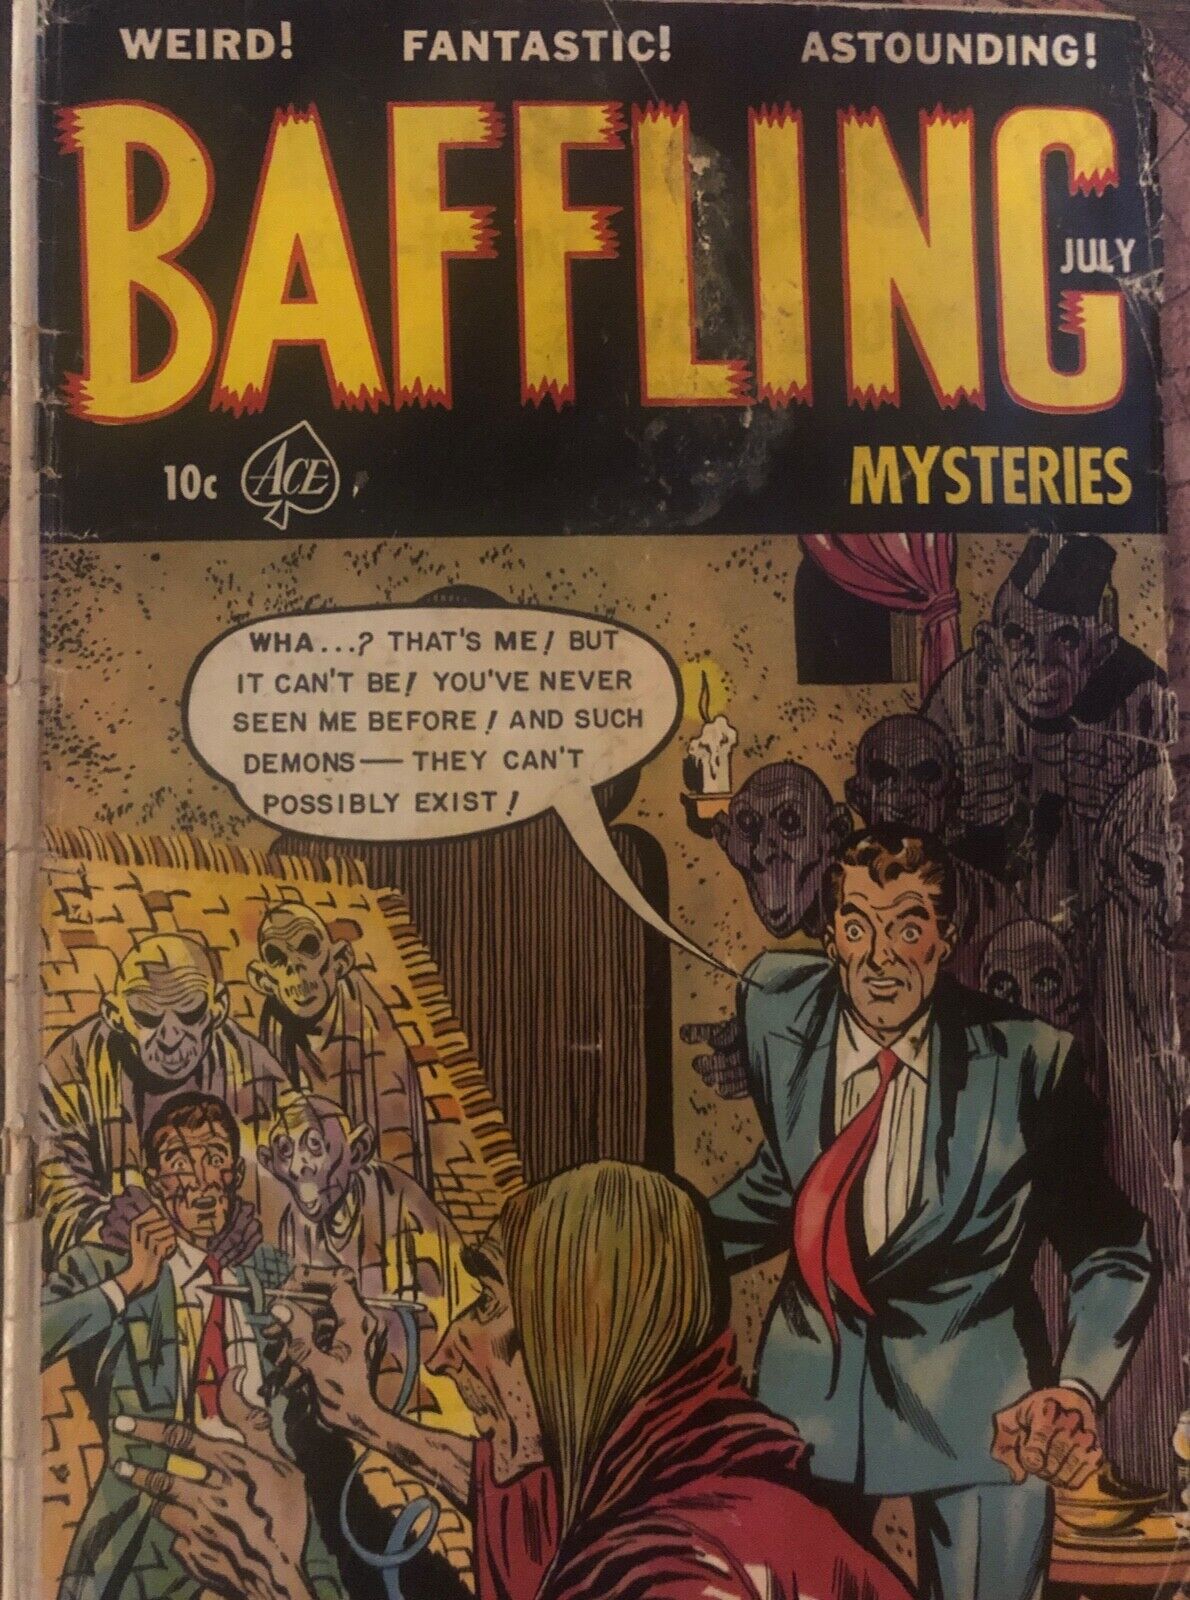 comic book baffling mysteries 1953 pre-code horror